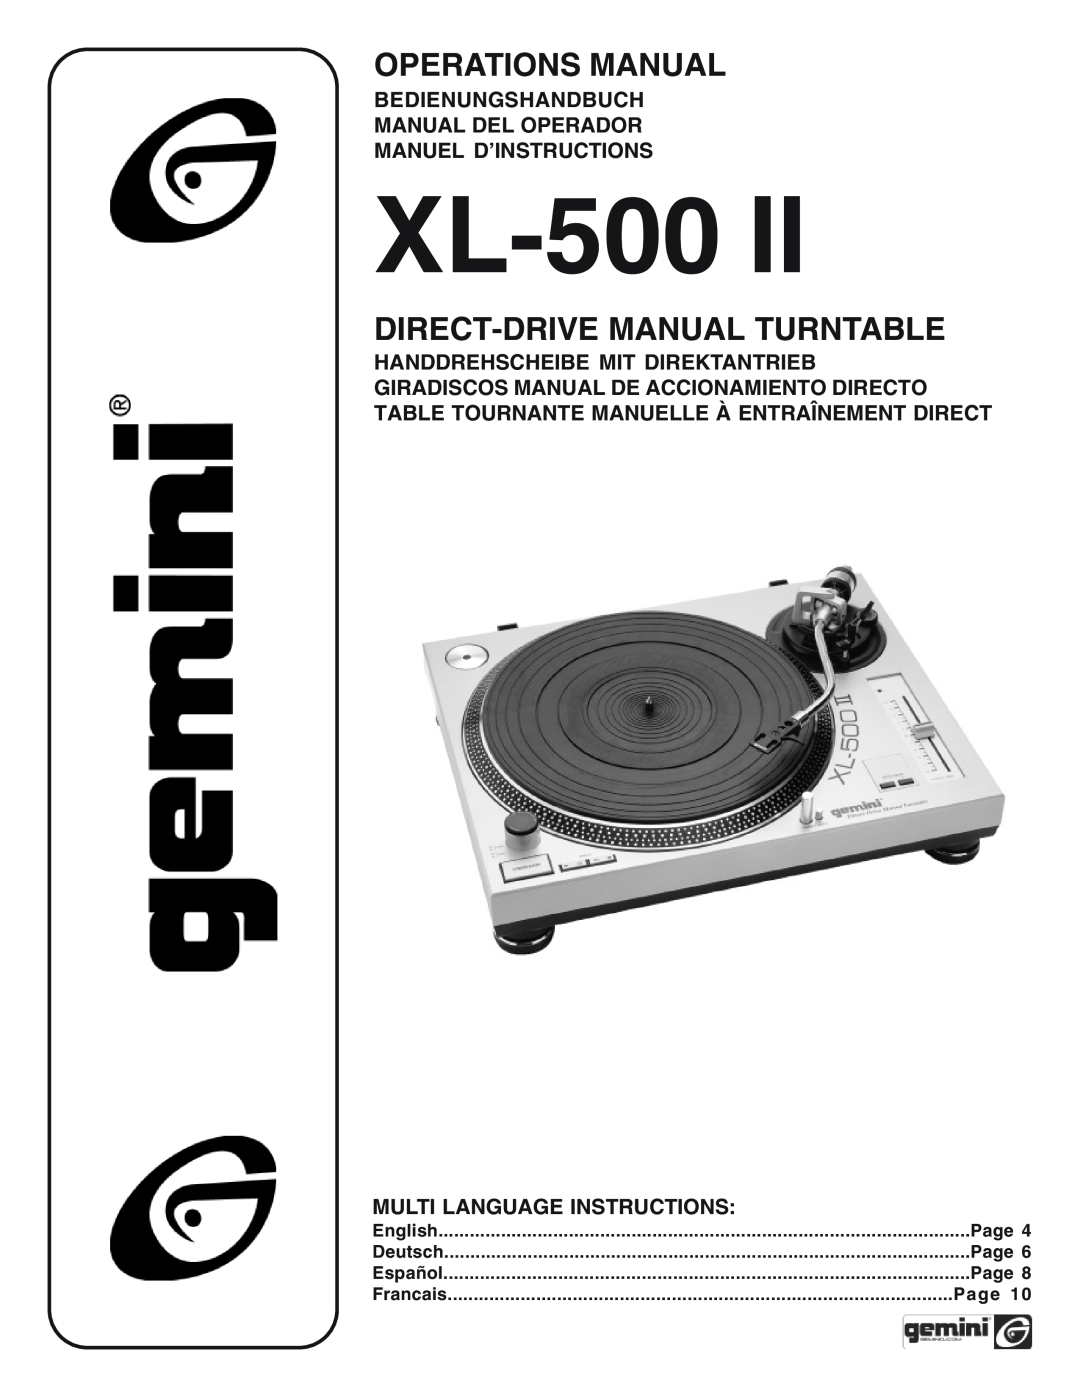 Gemini XL-500II manual Bedienungshandbuch Manual Del Operador, Manuel D’Instructions, Multi Language Instructions, Page 